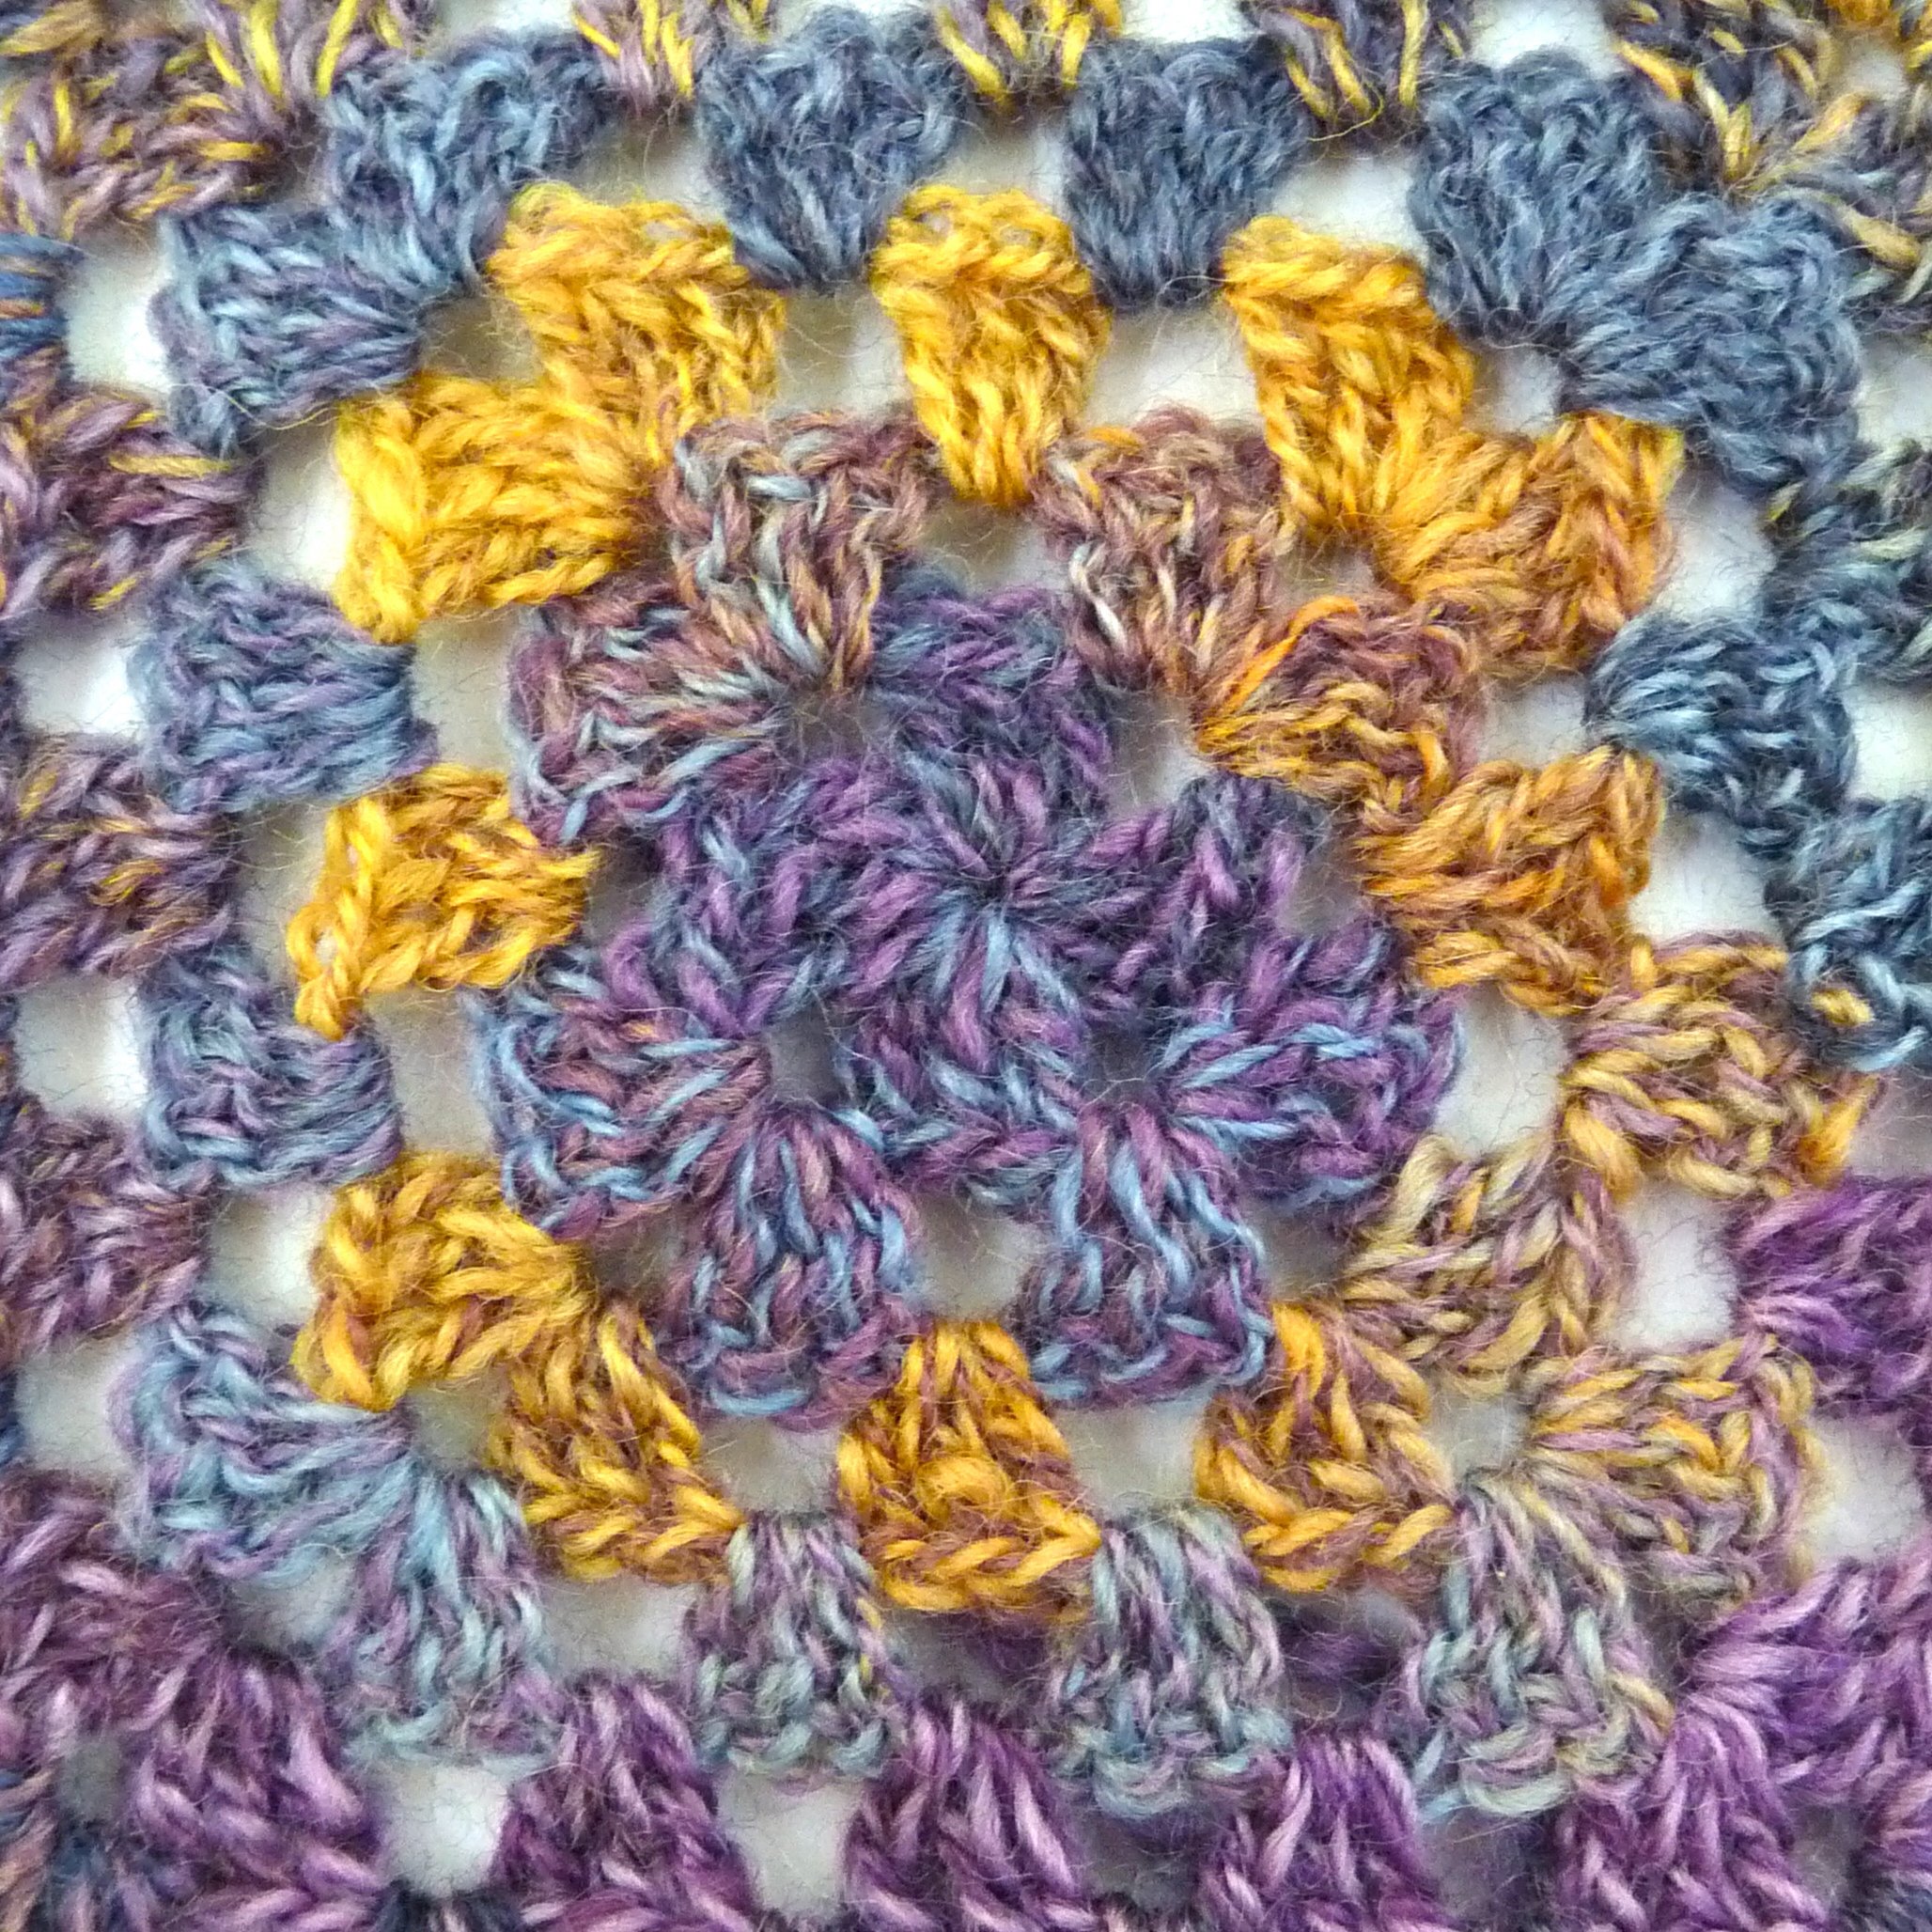 Crocheted granny square with handspun yarn